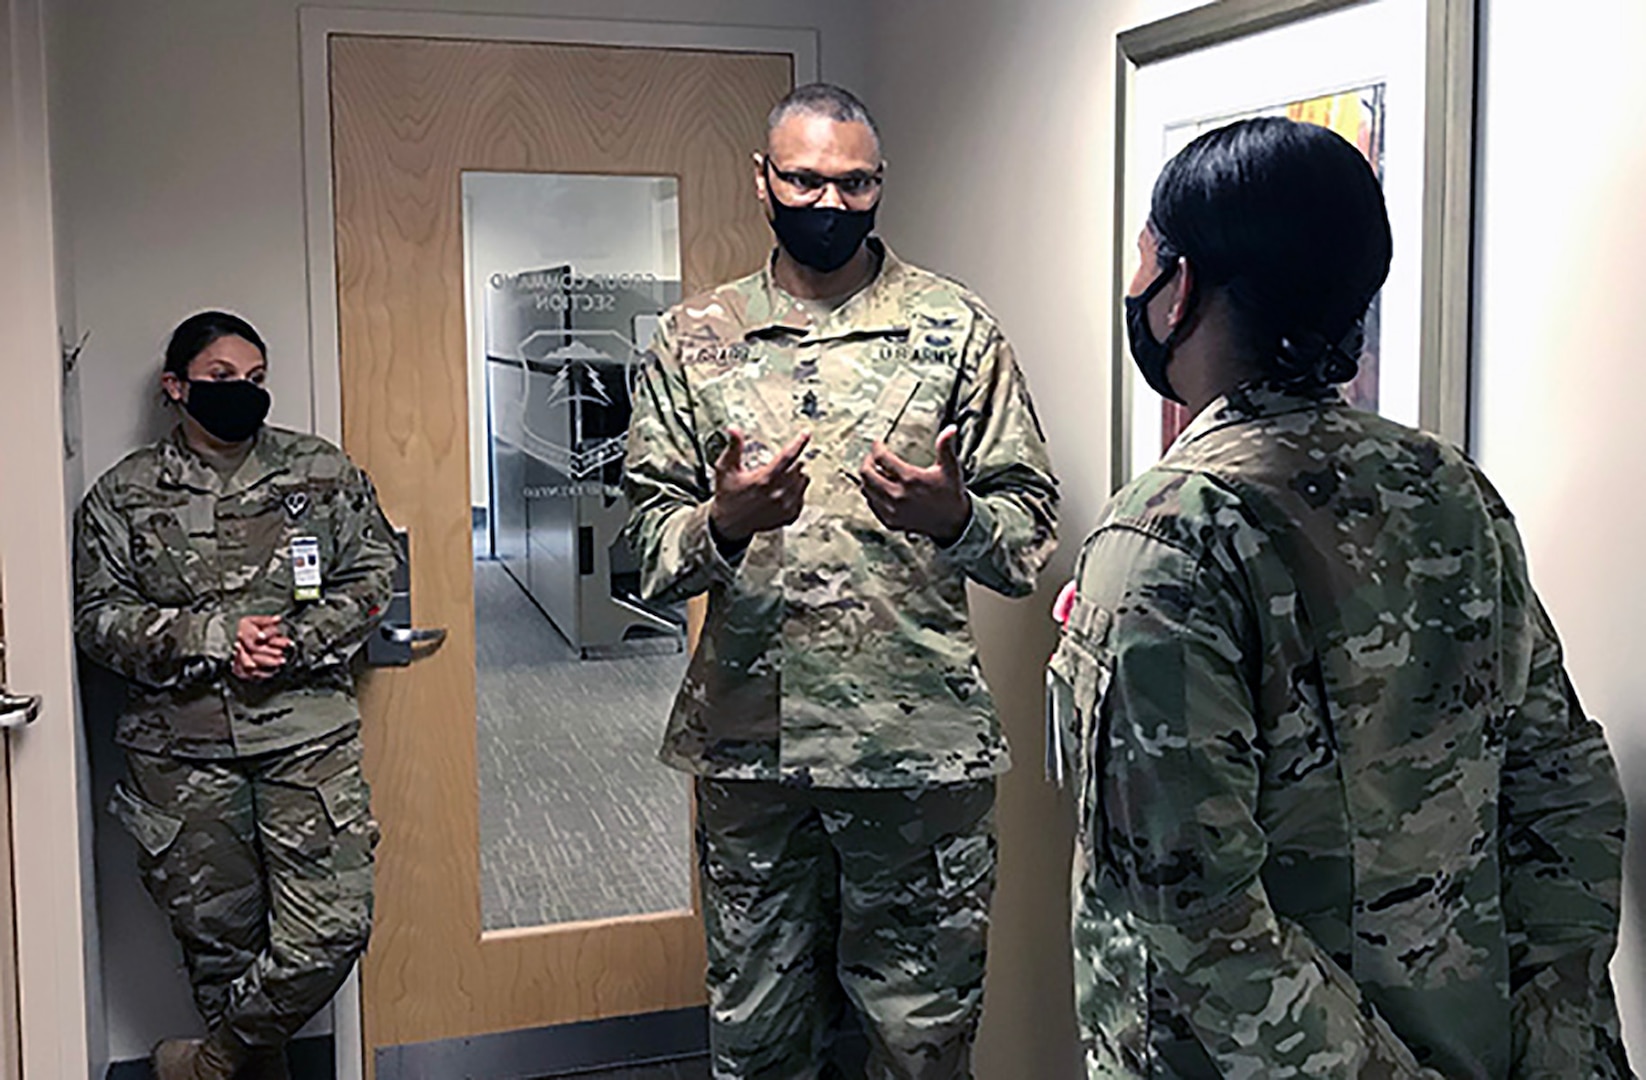 Army Command Sgt. Maj. Michael Gragg (center), senior enlisted leader at the Defense Health Agency, mentors airmen at Joint Base Langley-Eustis in Hampton, Virginia, Sept. 23, 2020.